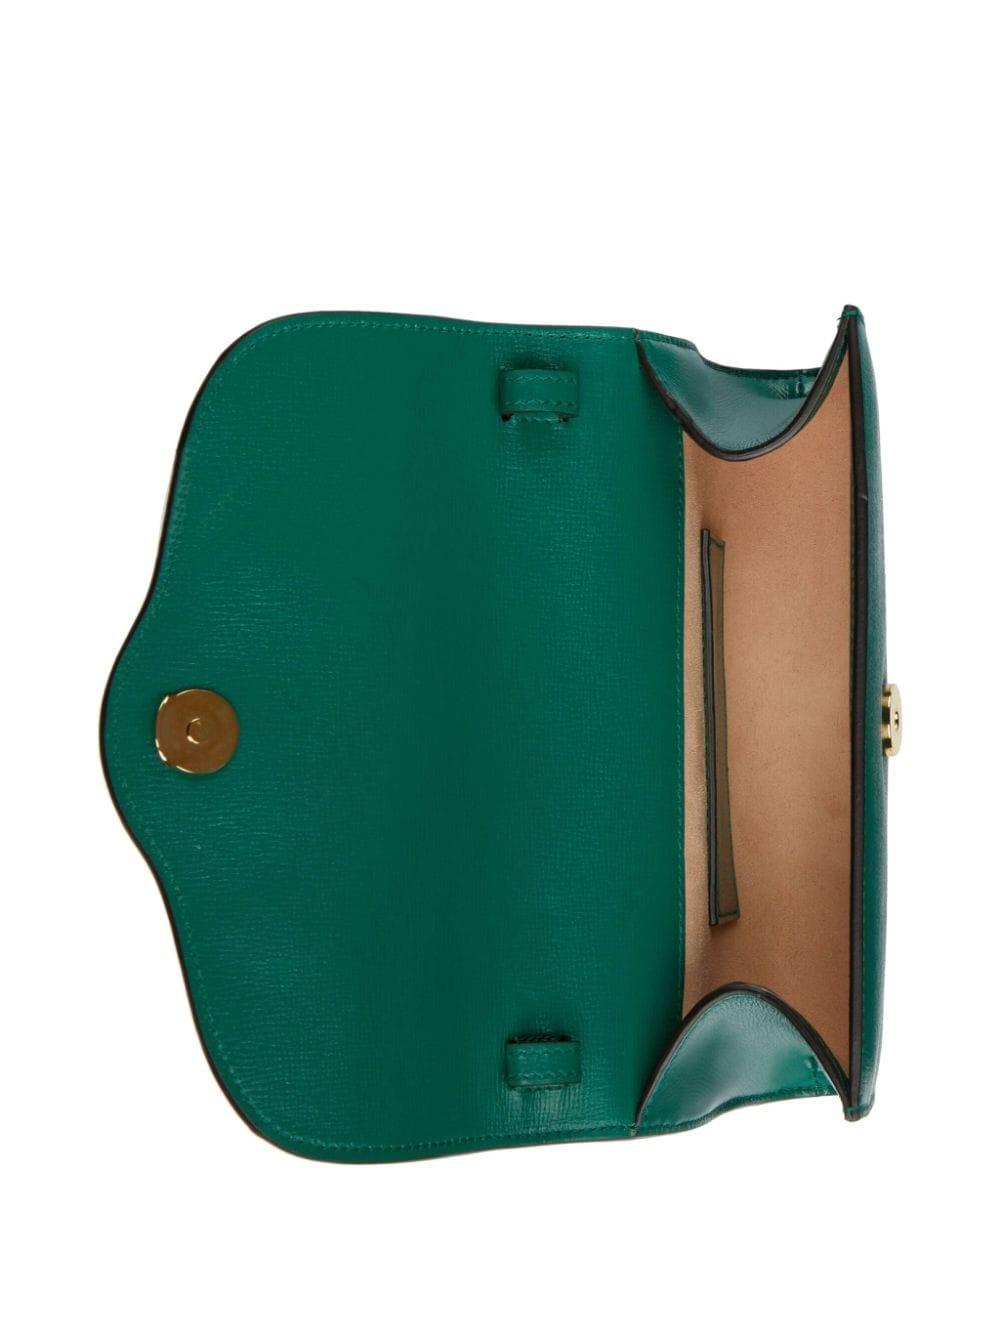 Gucci Horsebit 1955 Mini Bag in Green | Lyst